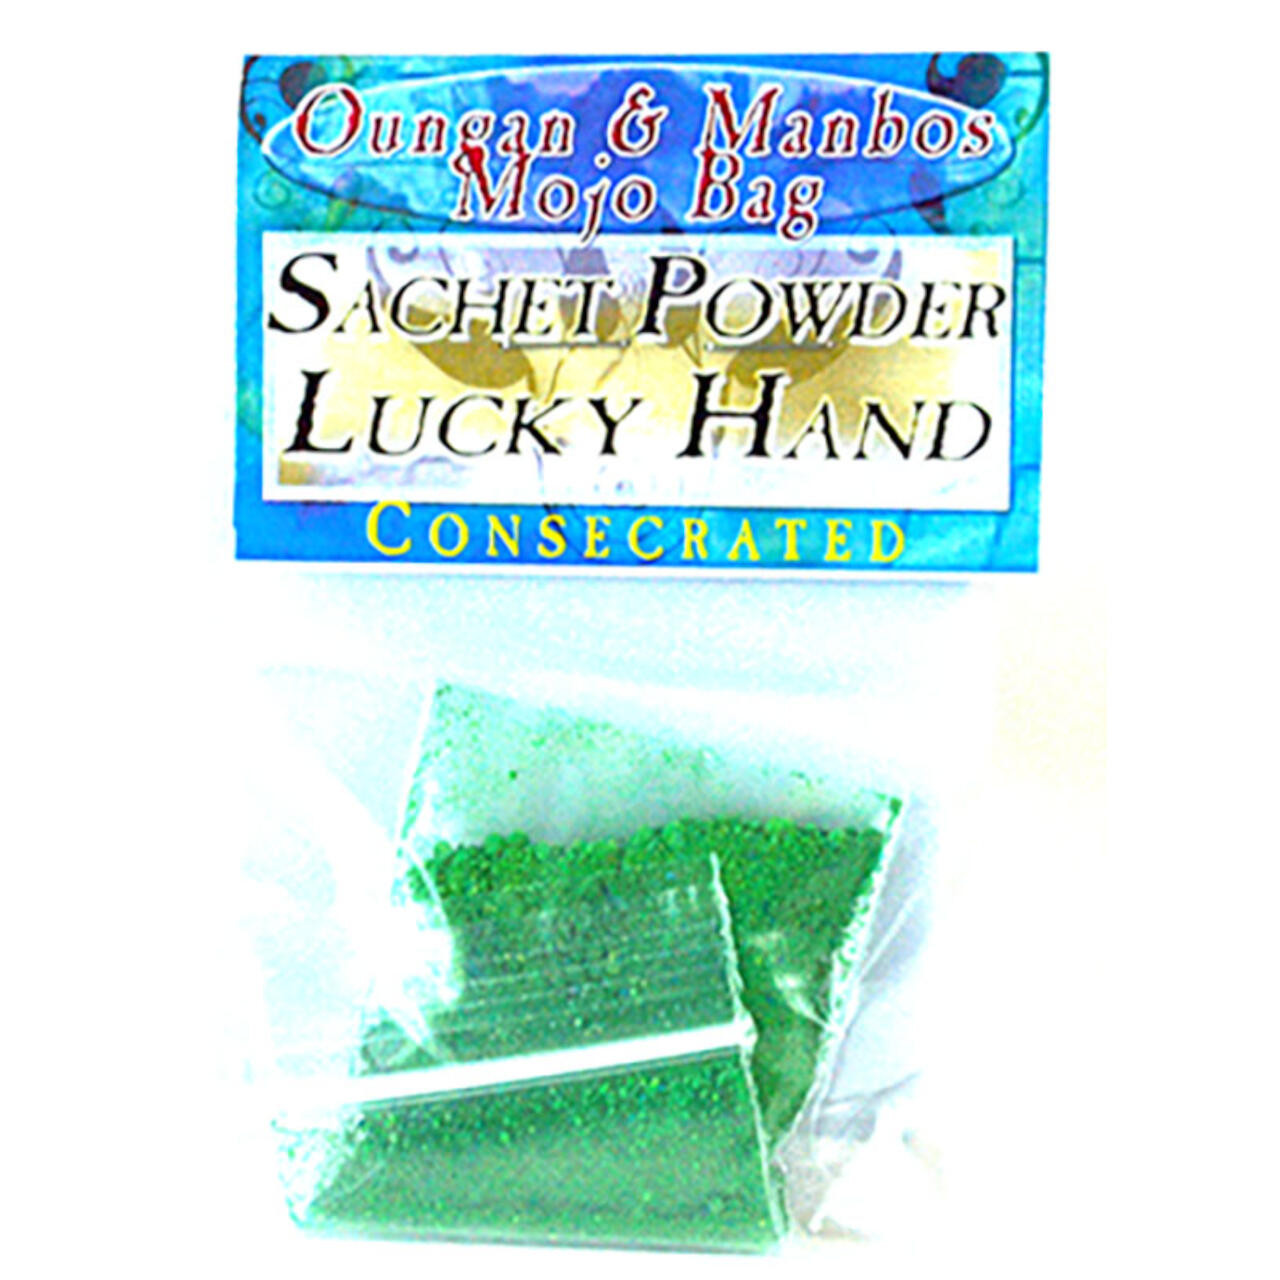 Lucky Hand Sachet Powder Consecrated .5 oz